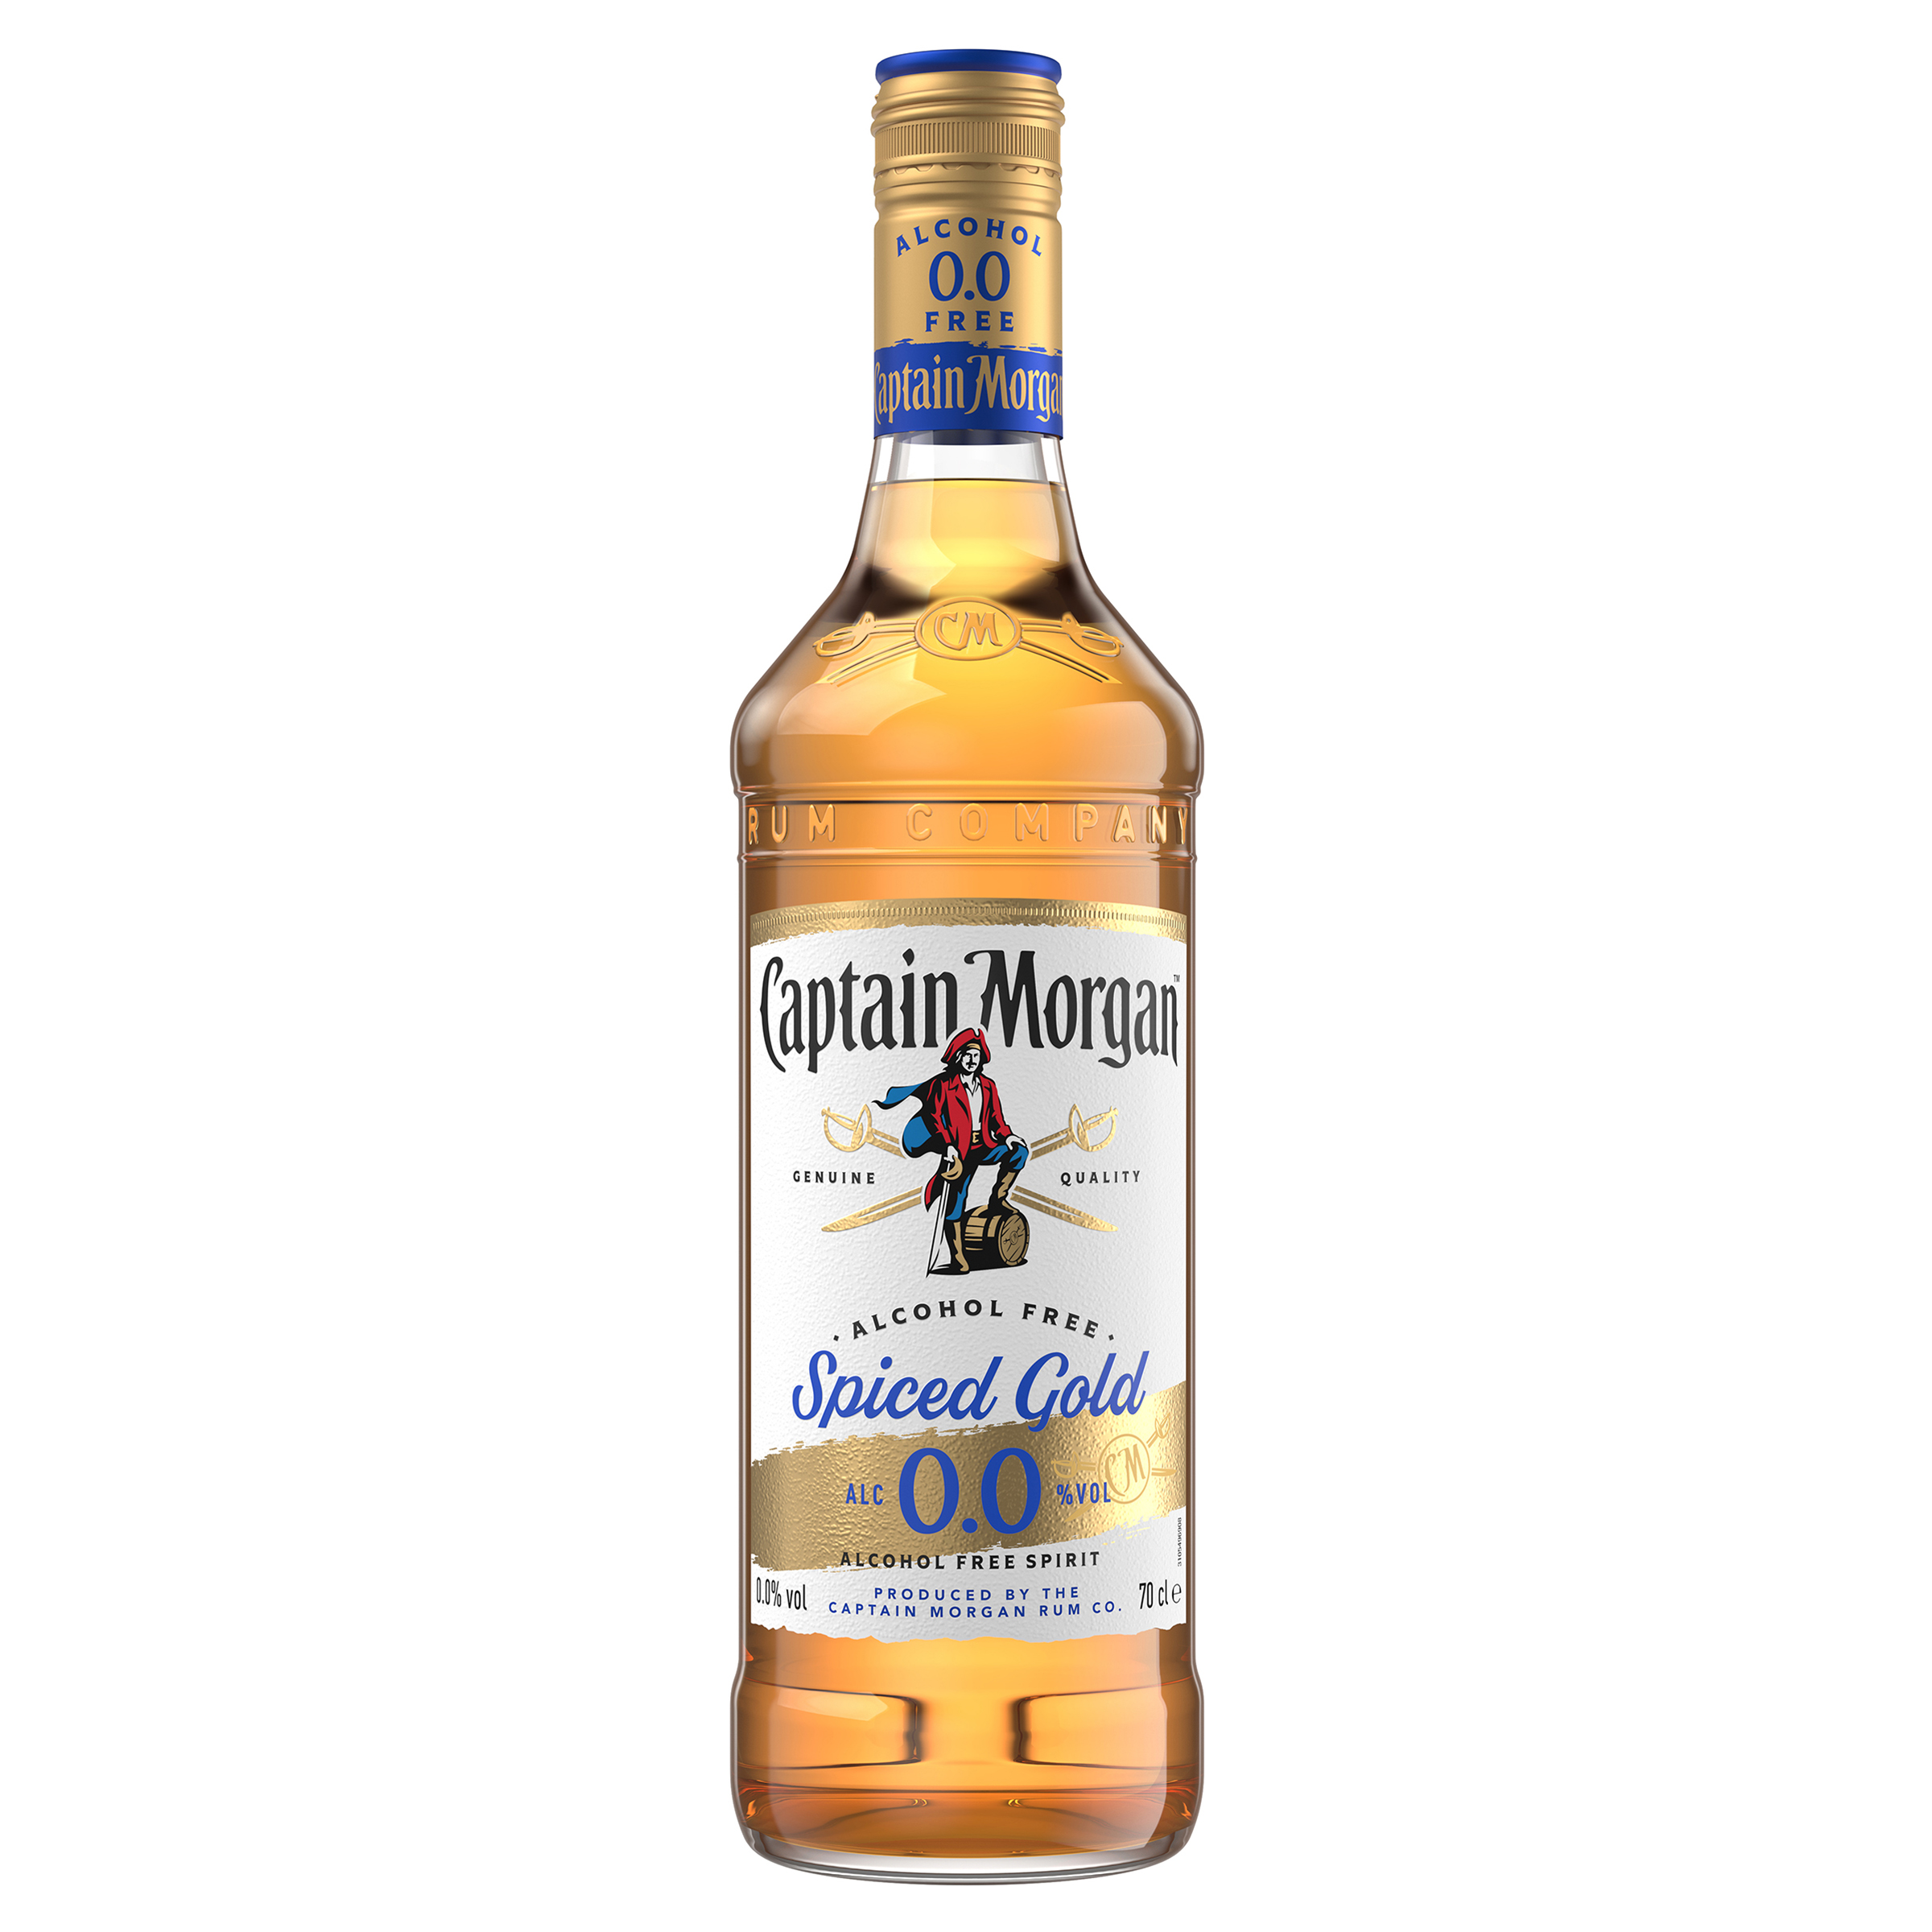 Captain Morgan Free Spirit, 70cl | Alcohol Spiced Gold Bar 0.0 The